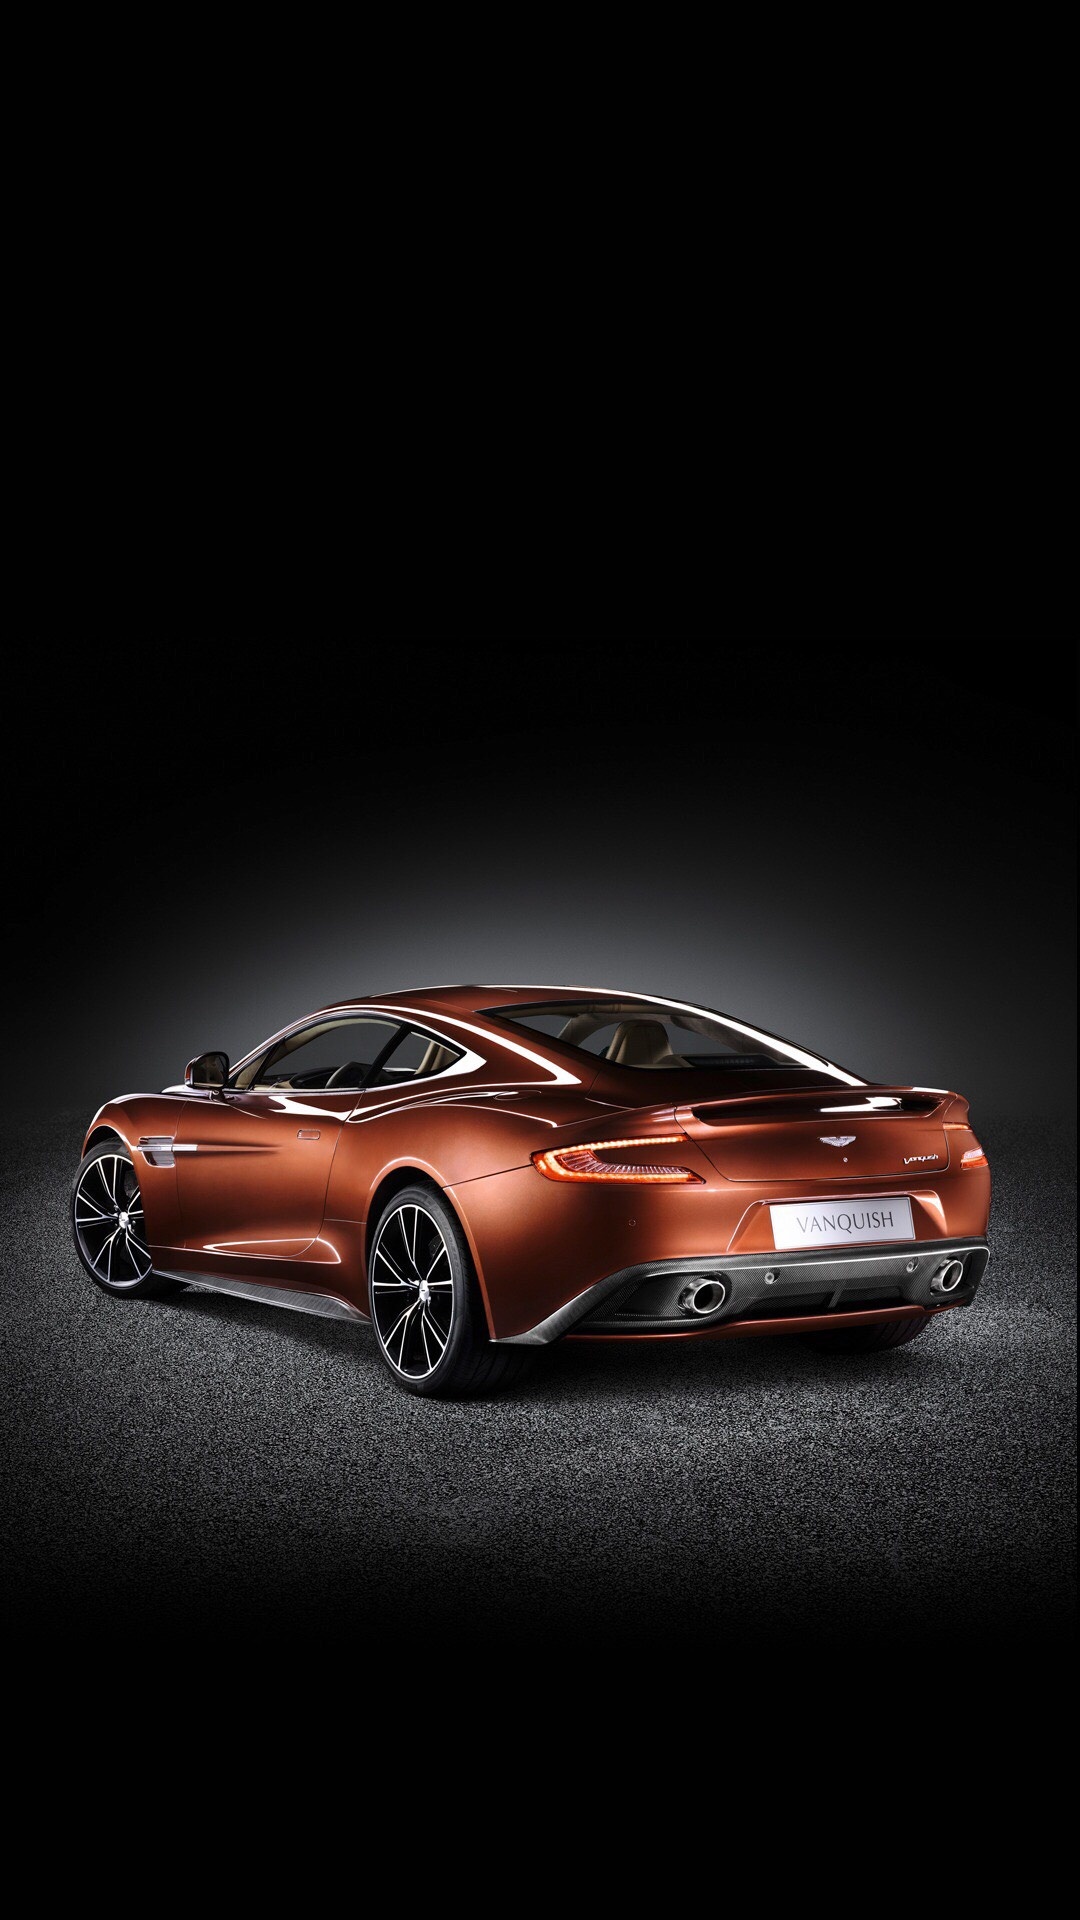 Aston Martin Vanquish, iPhone wallpaper, Luxurious sports car, Aston Martin excellence, 1080x1920 Full HD Handy